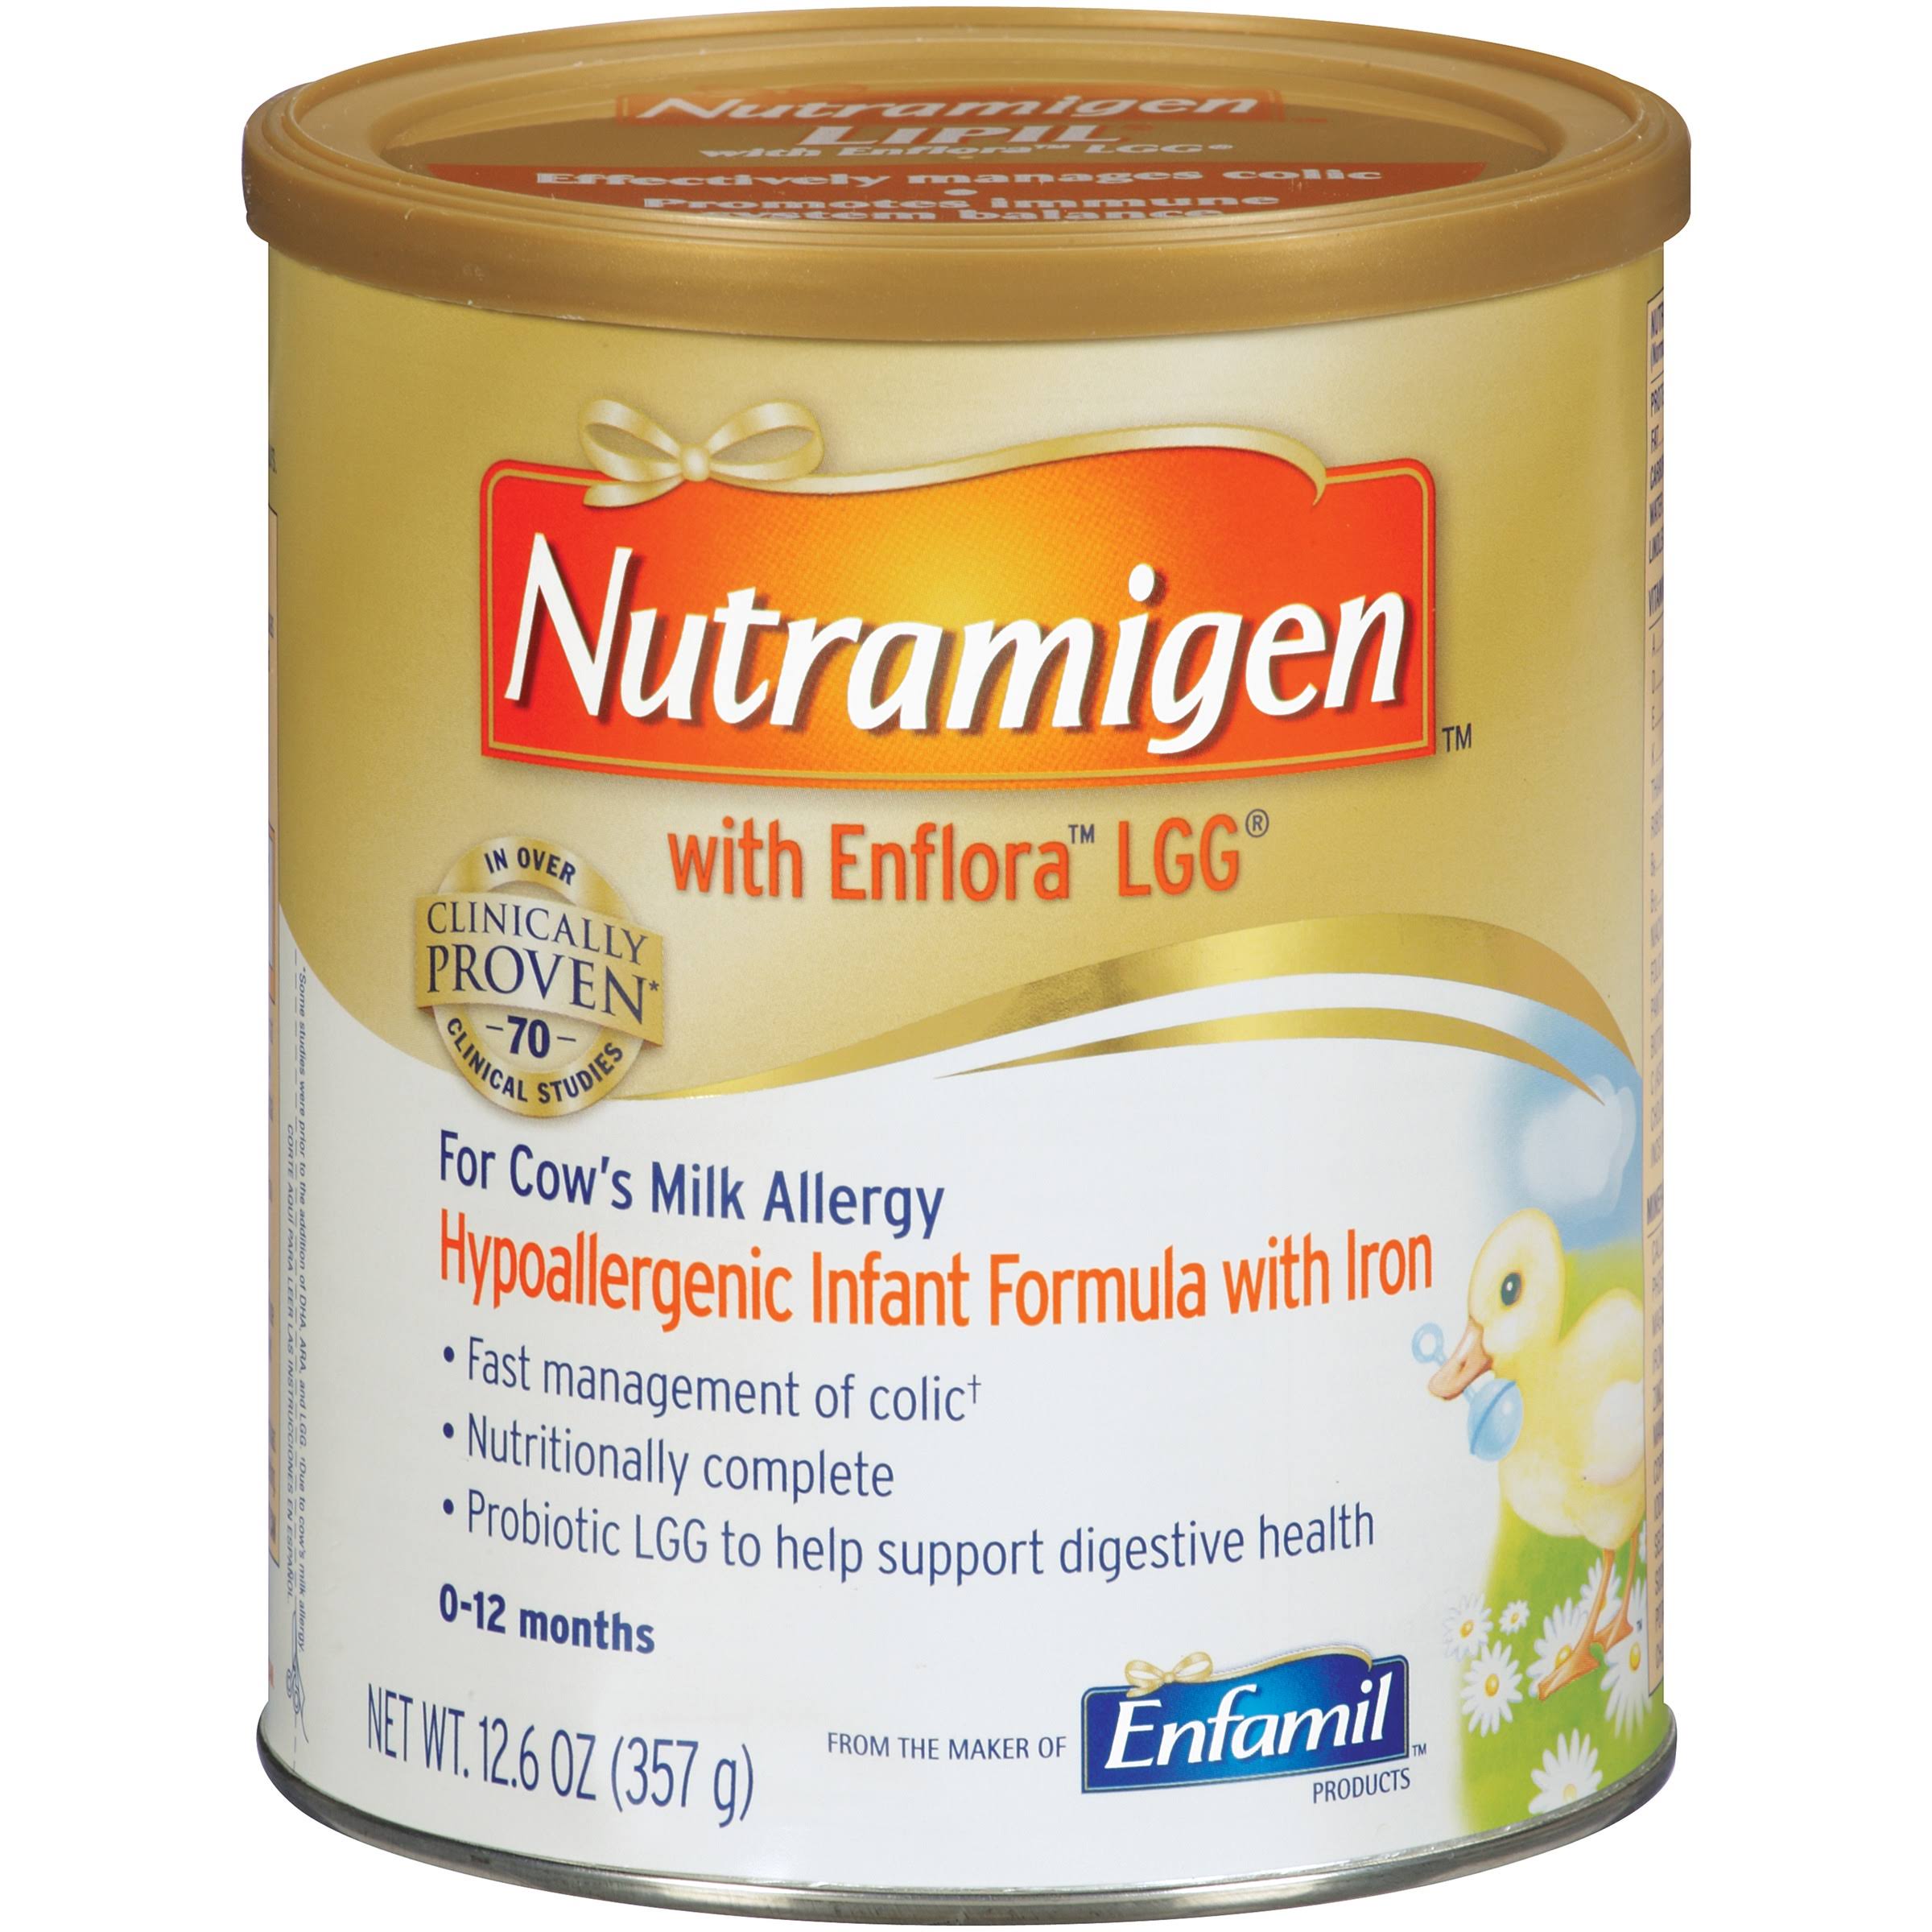 Enfamil Nutramigen Powdered Formula - 12.6 oz, with Enflora LGG